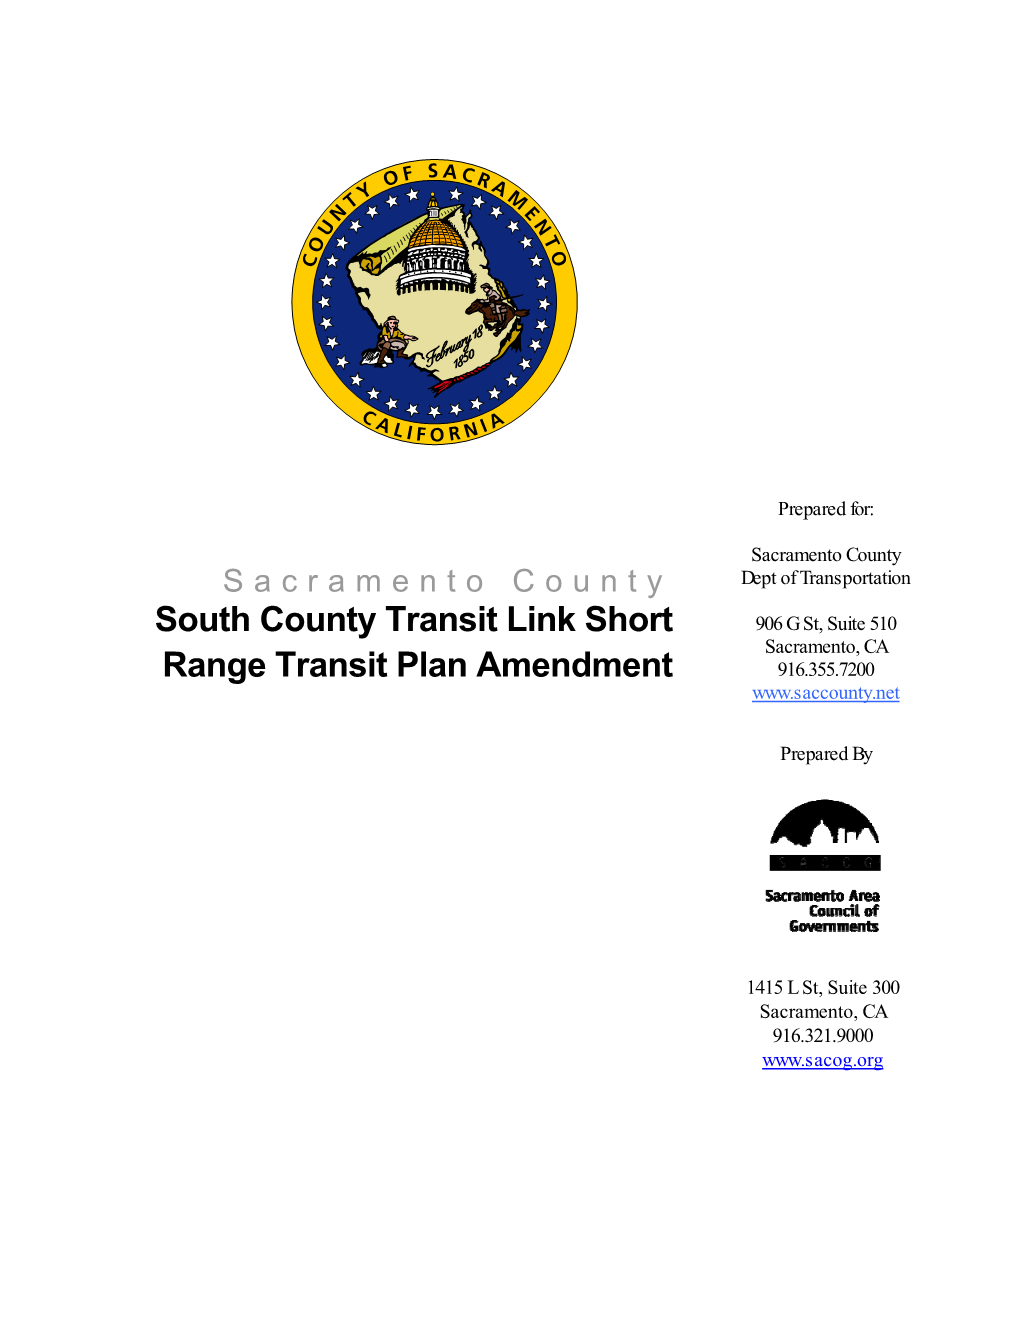 Transit Link Short 906 G St, Suite 510 Sacramento, CA